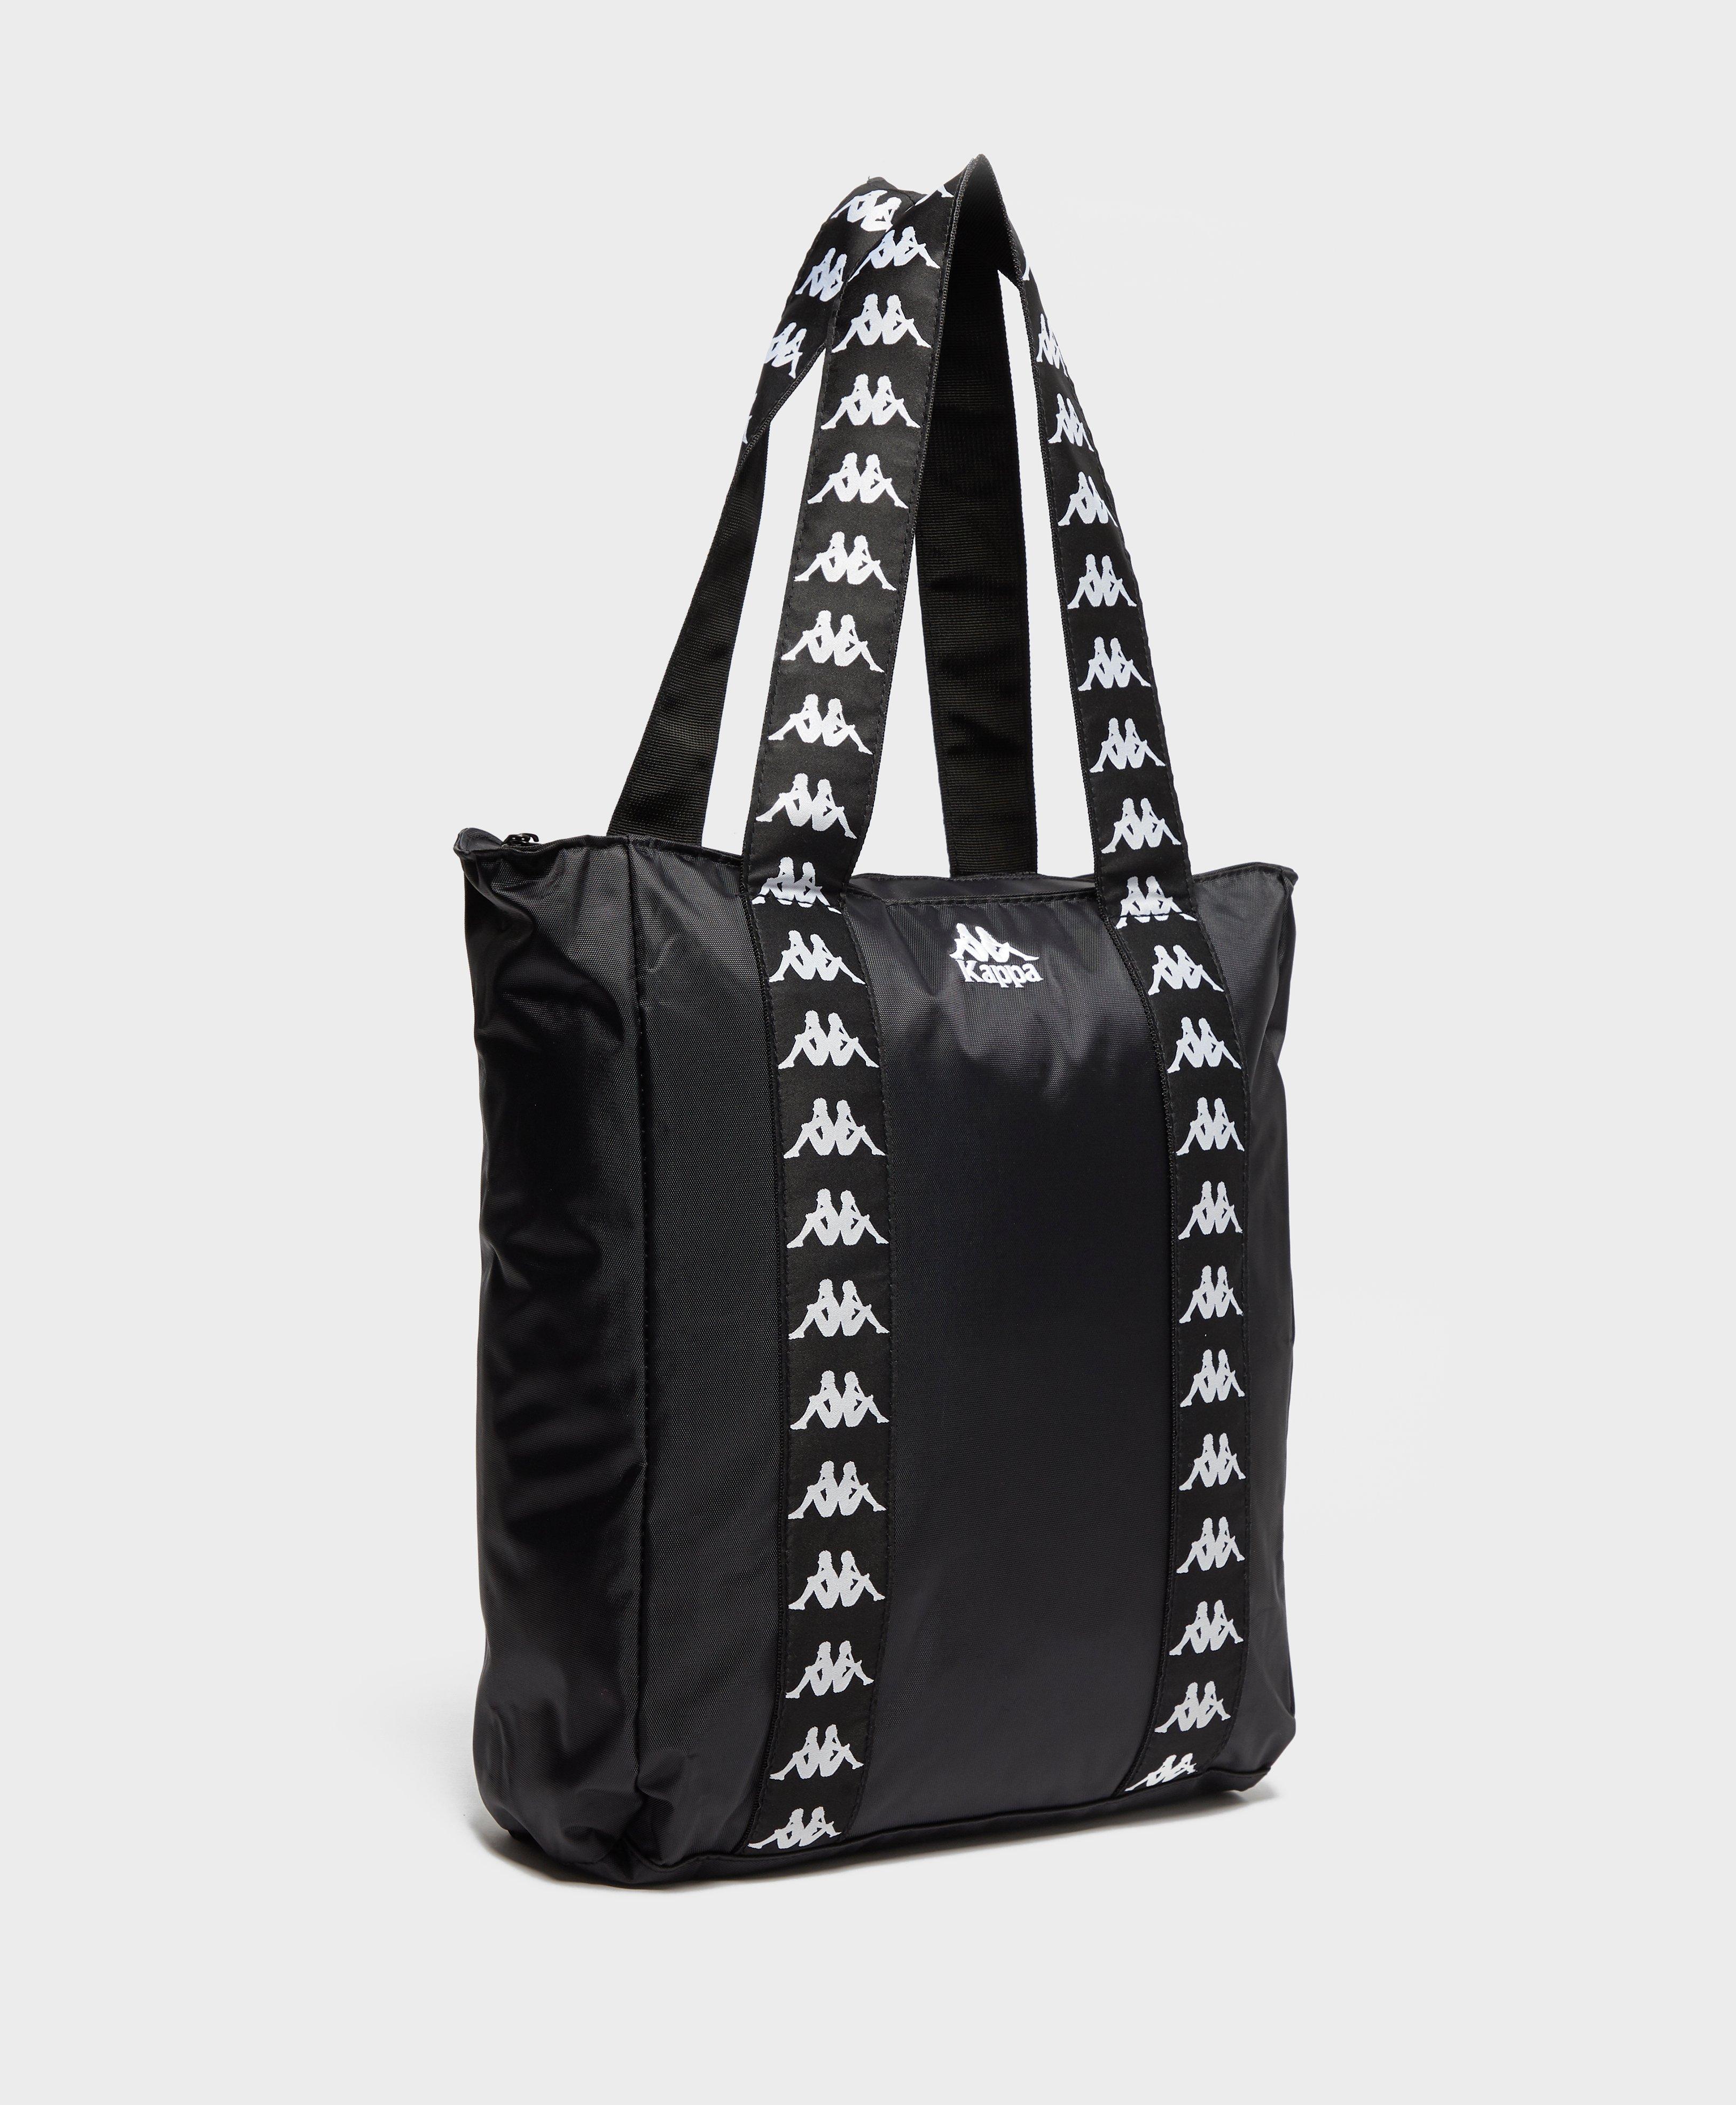 Kappa Synthetic Tote Bag in Black/White (Black) for Men - Lyst